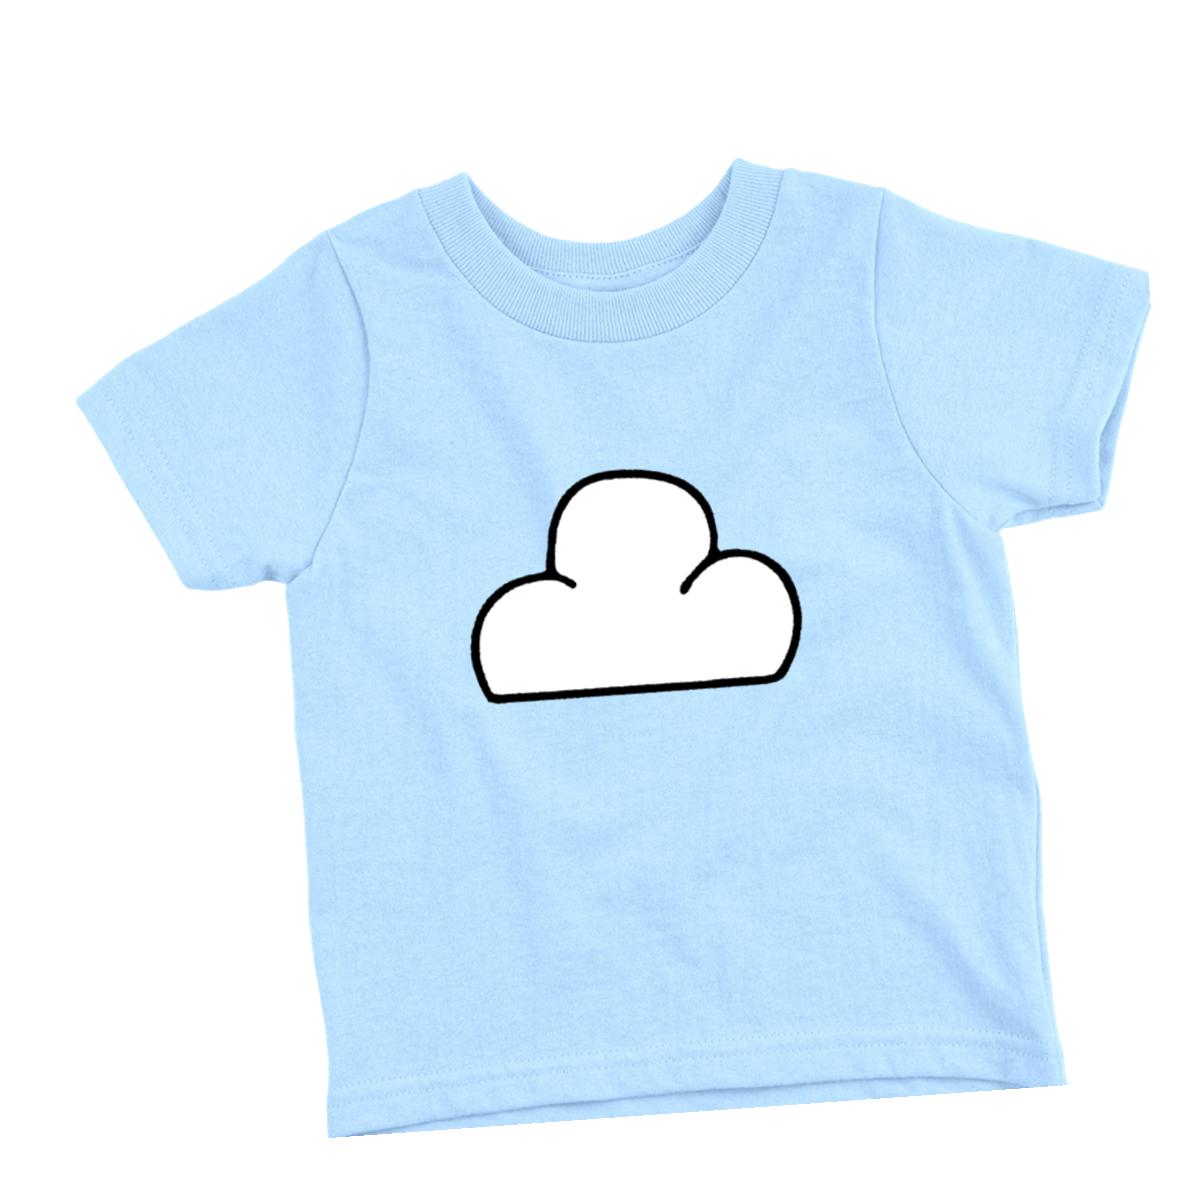 Cloud Infant Tee 24M light-blue